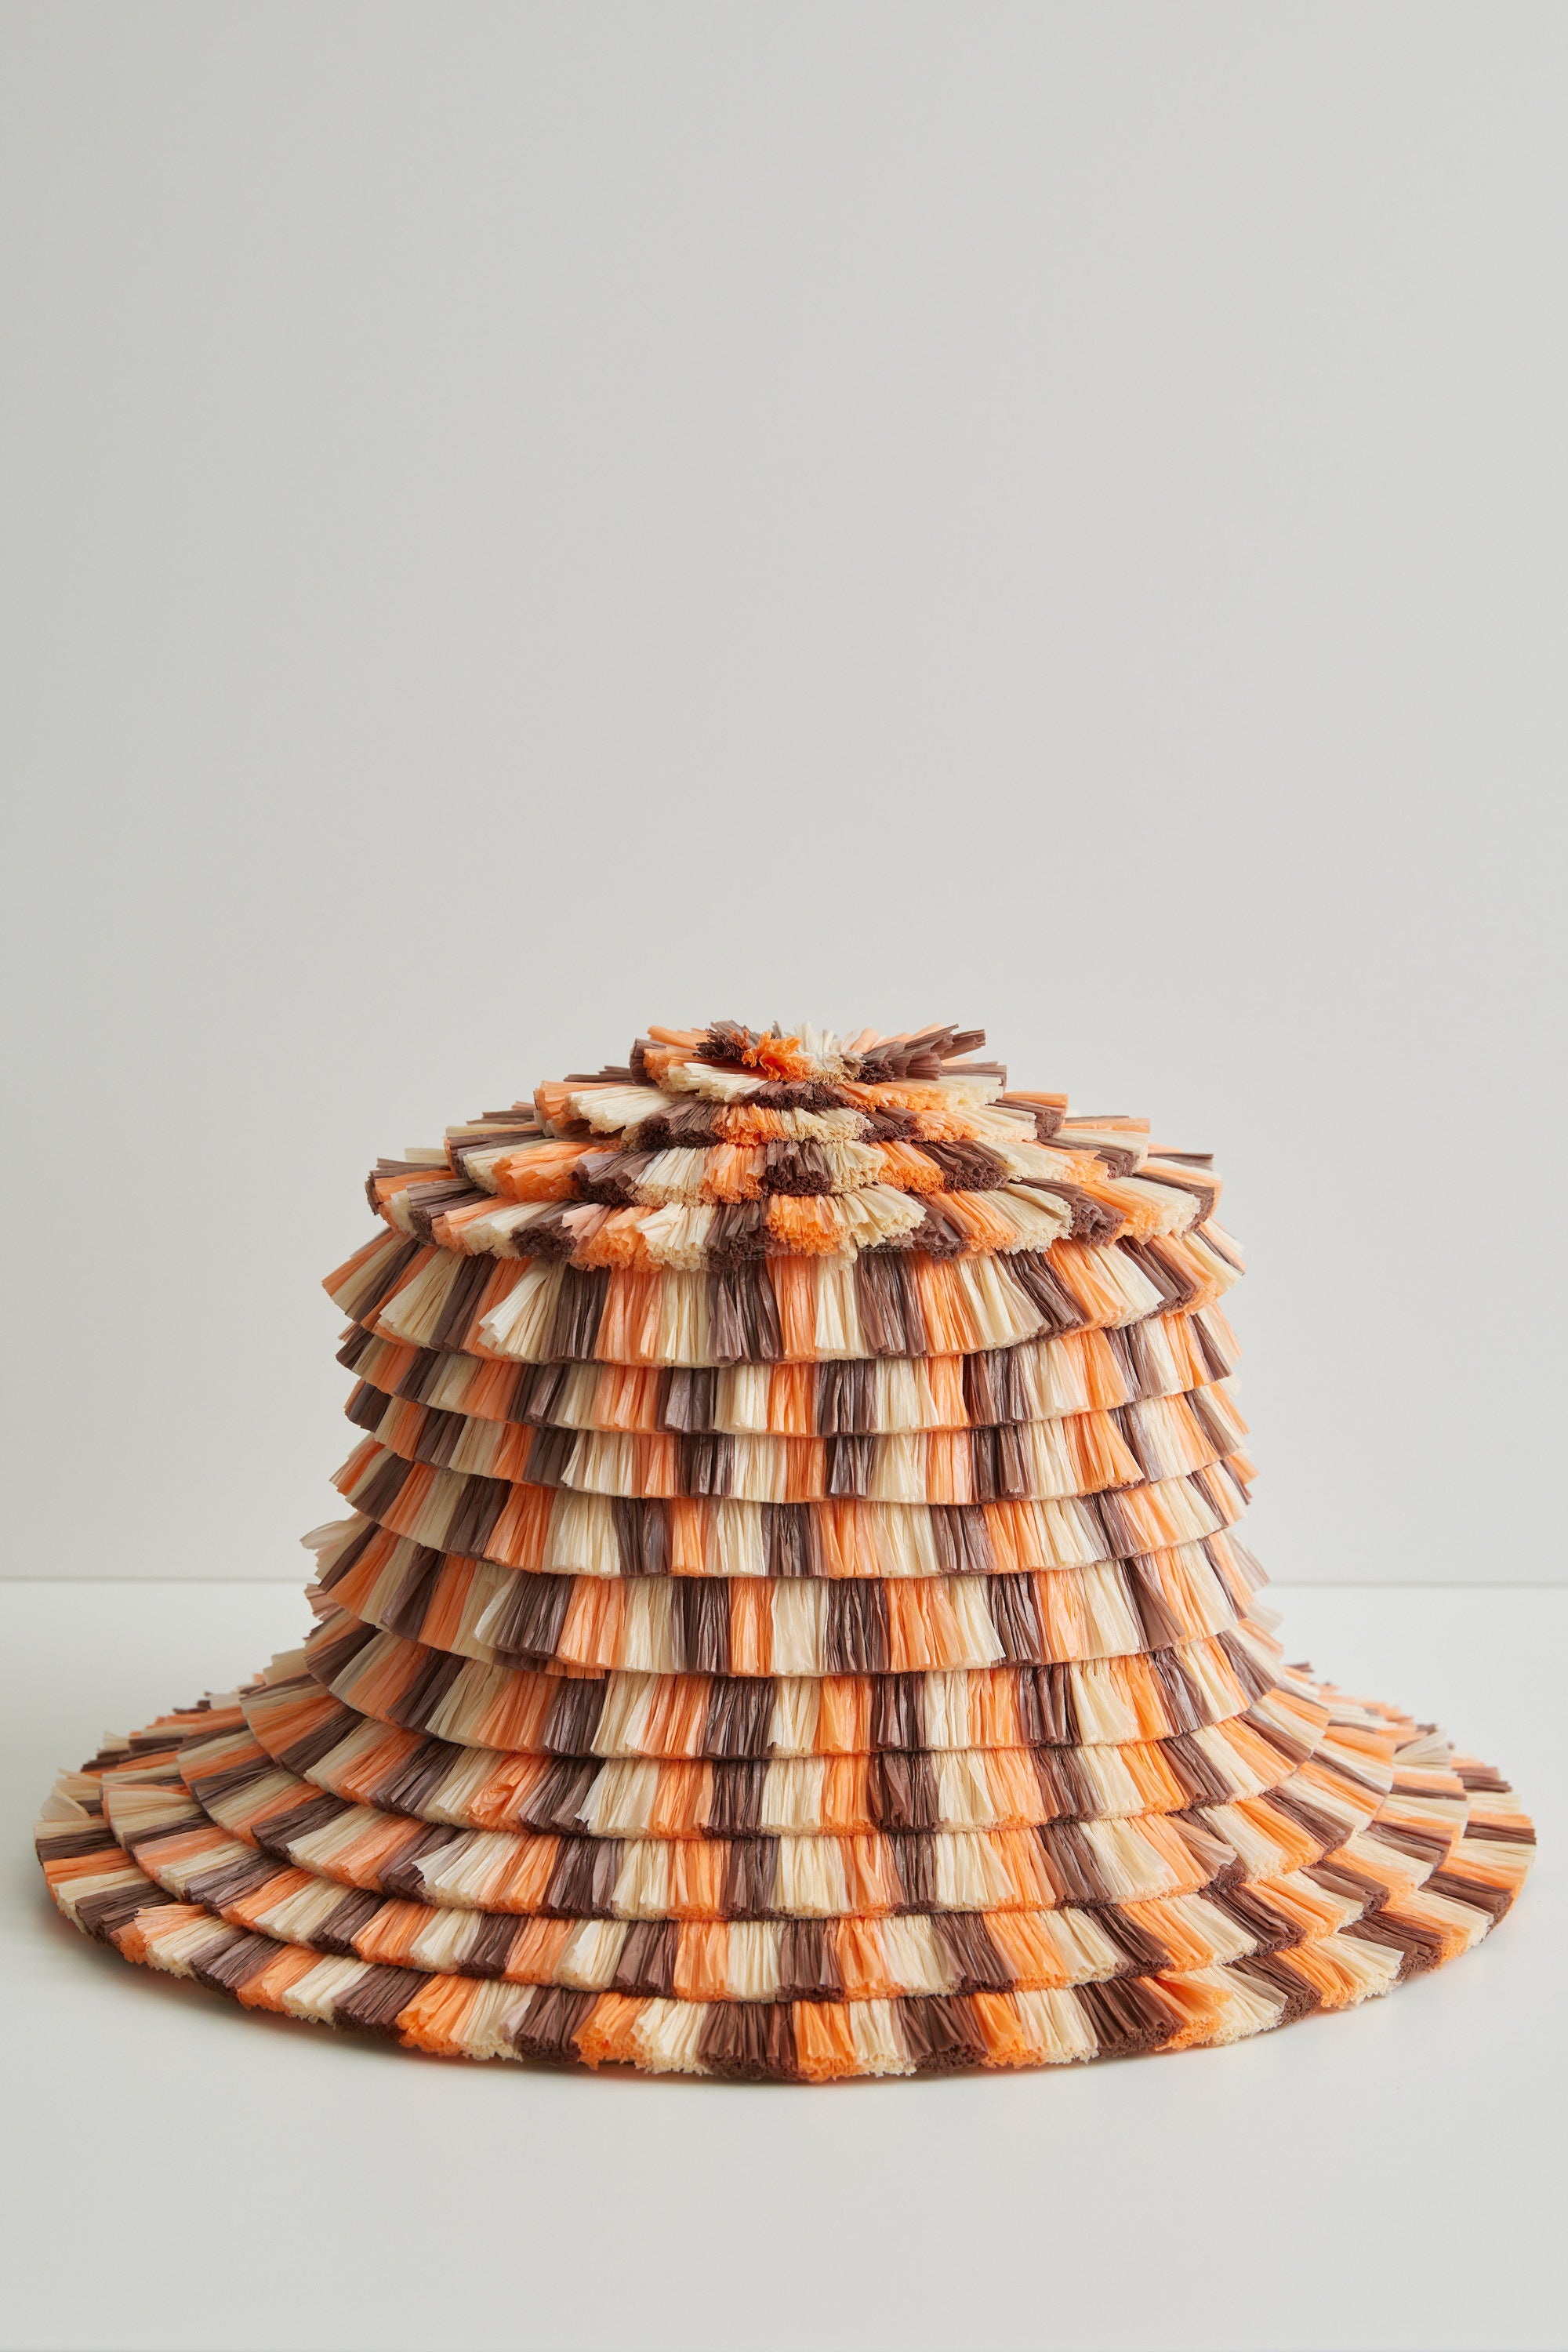 Chrysanthemum straw hat - Orange and brown straw fringe